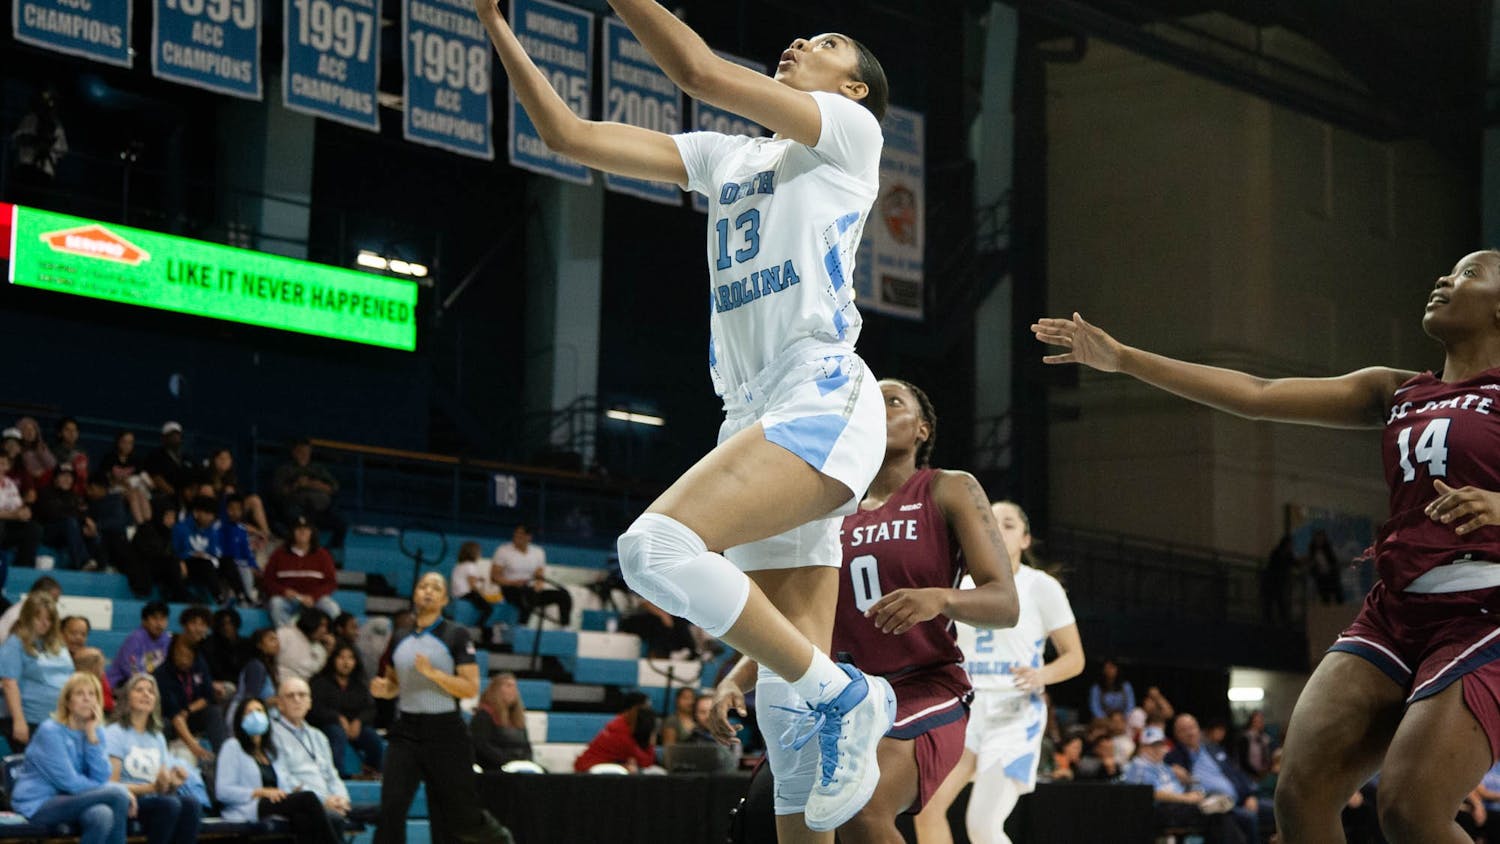 20221116_Turner_UNC-Women's-Basketball-vs-South-Carolina-State_select-10.jpg